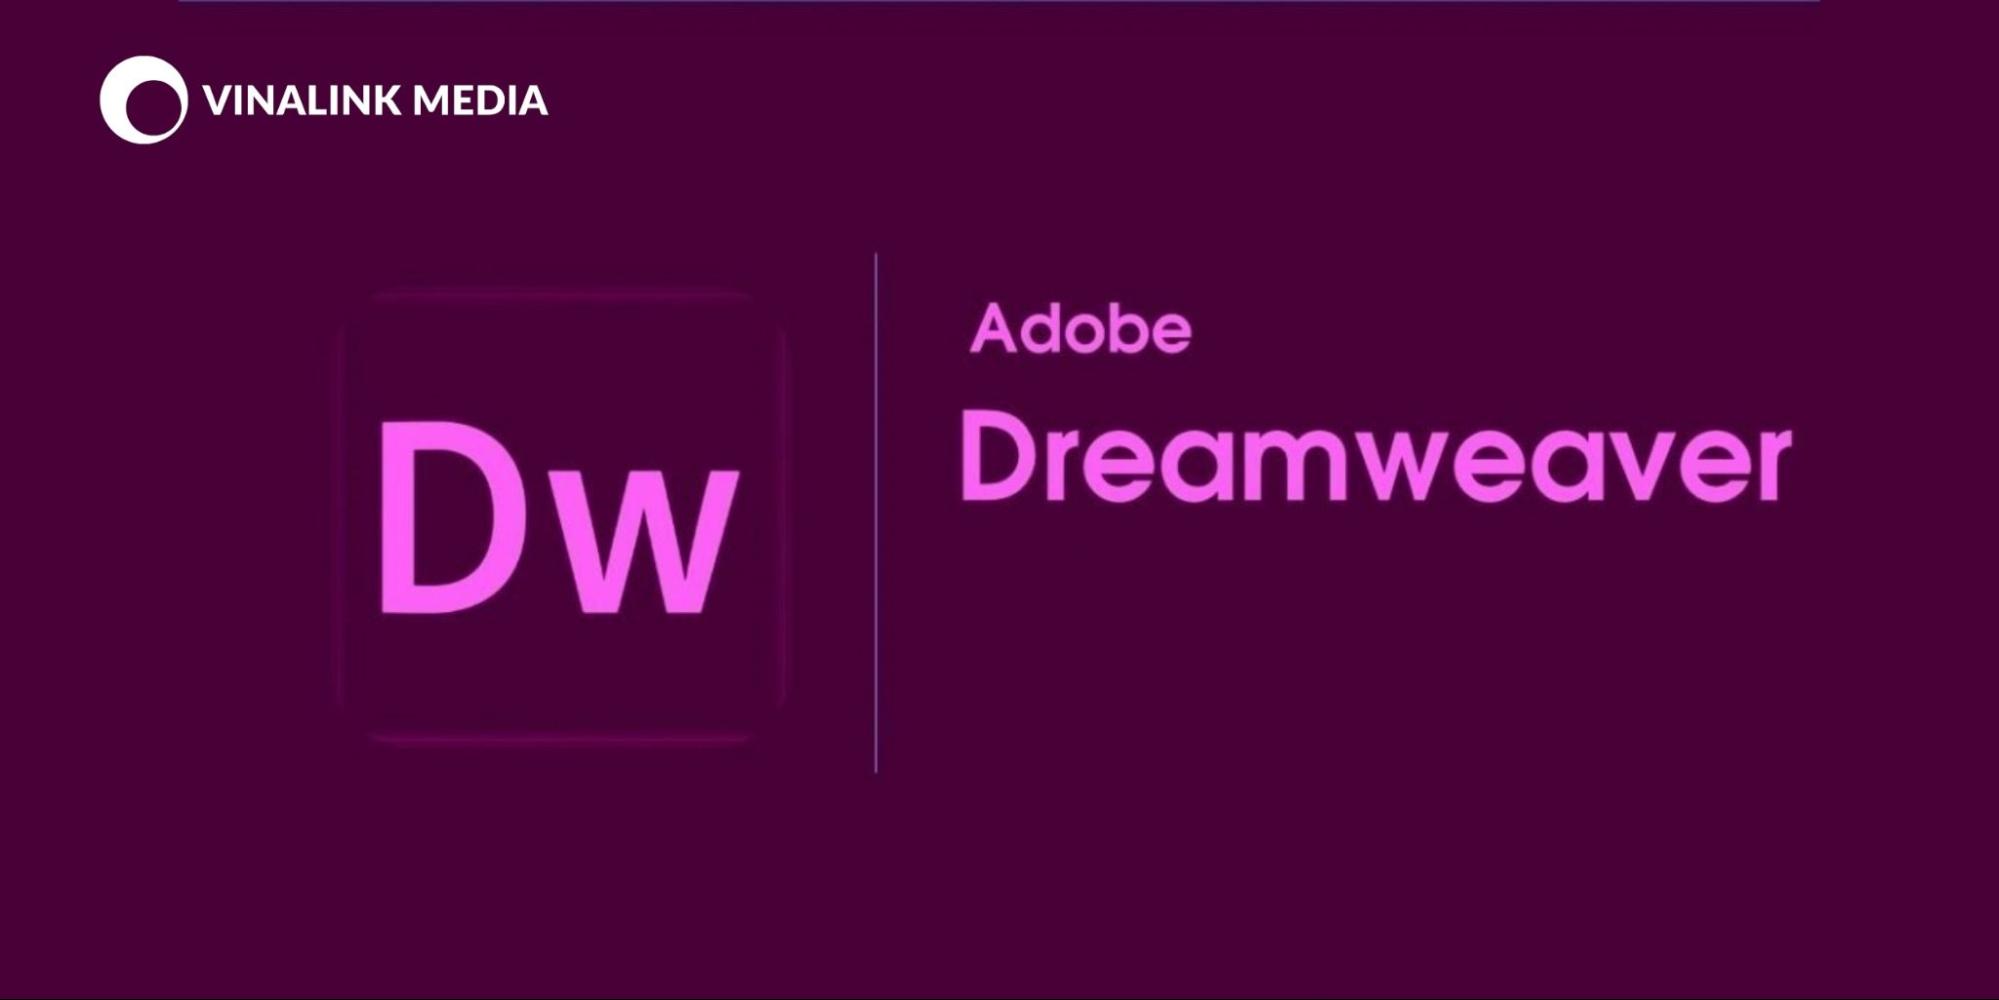 Adobe Dreamweaver, viết tắt là DW,